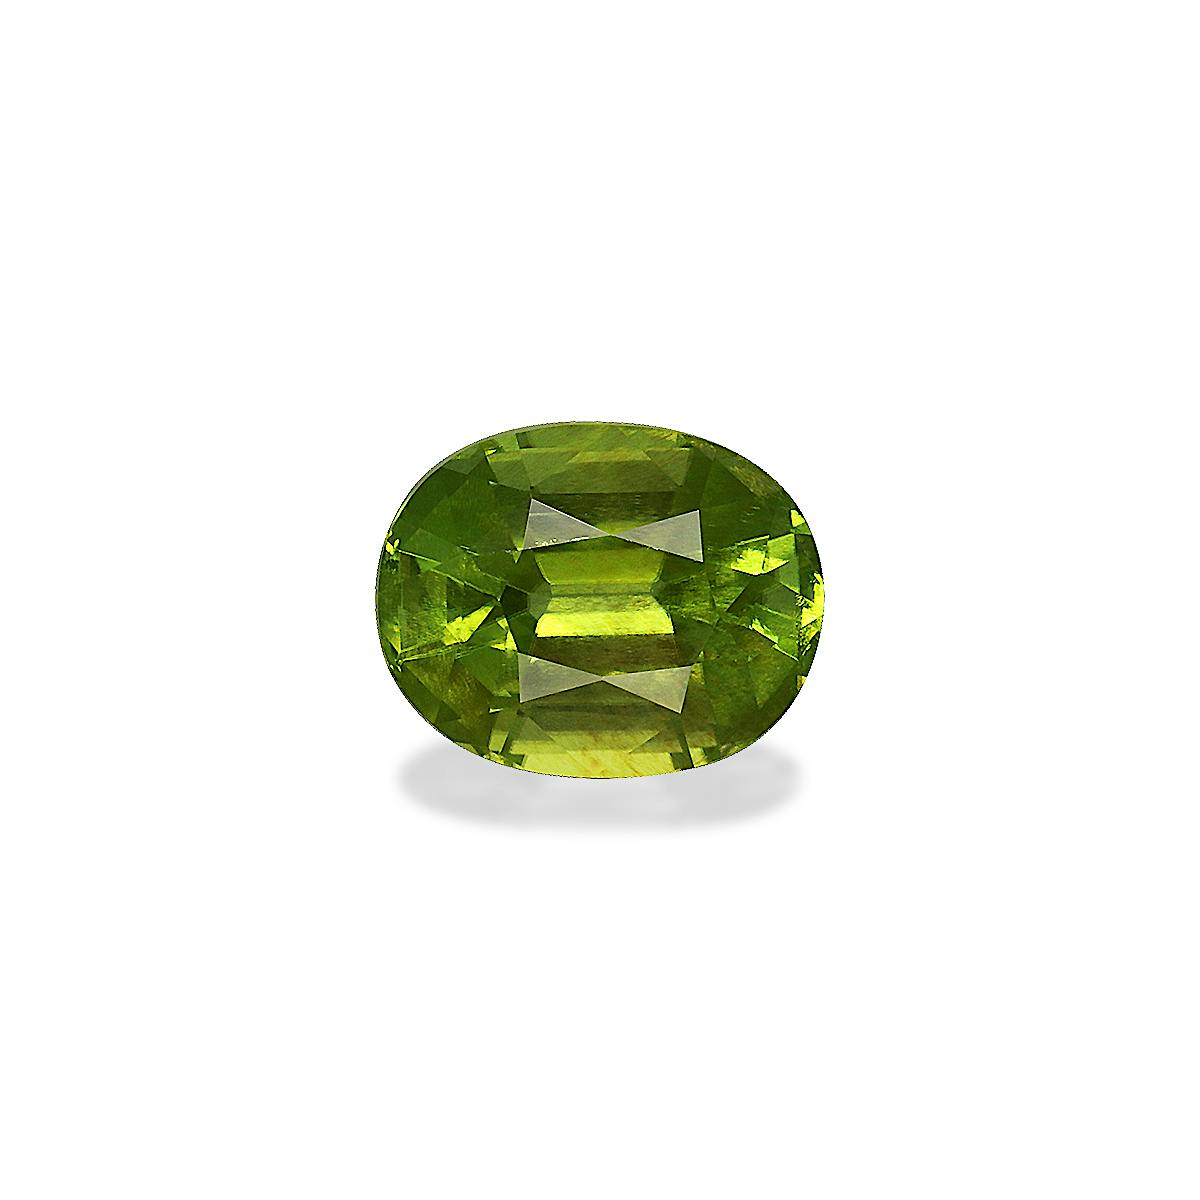 Green Peridot 3.66ct - Main Image